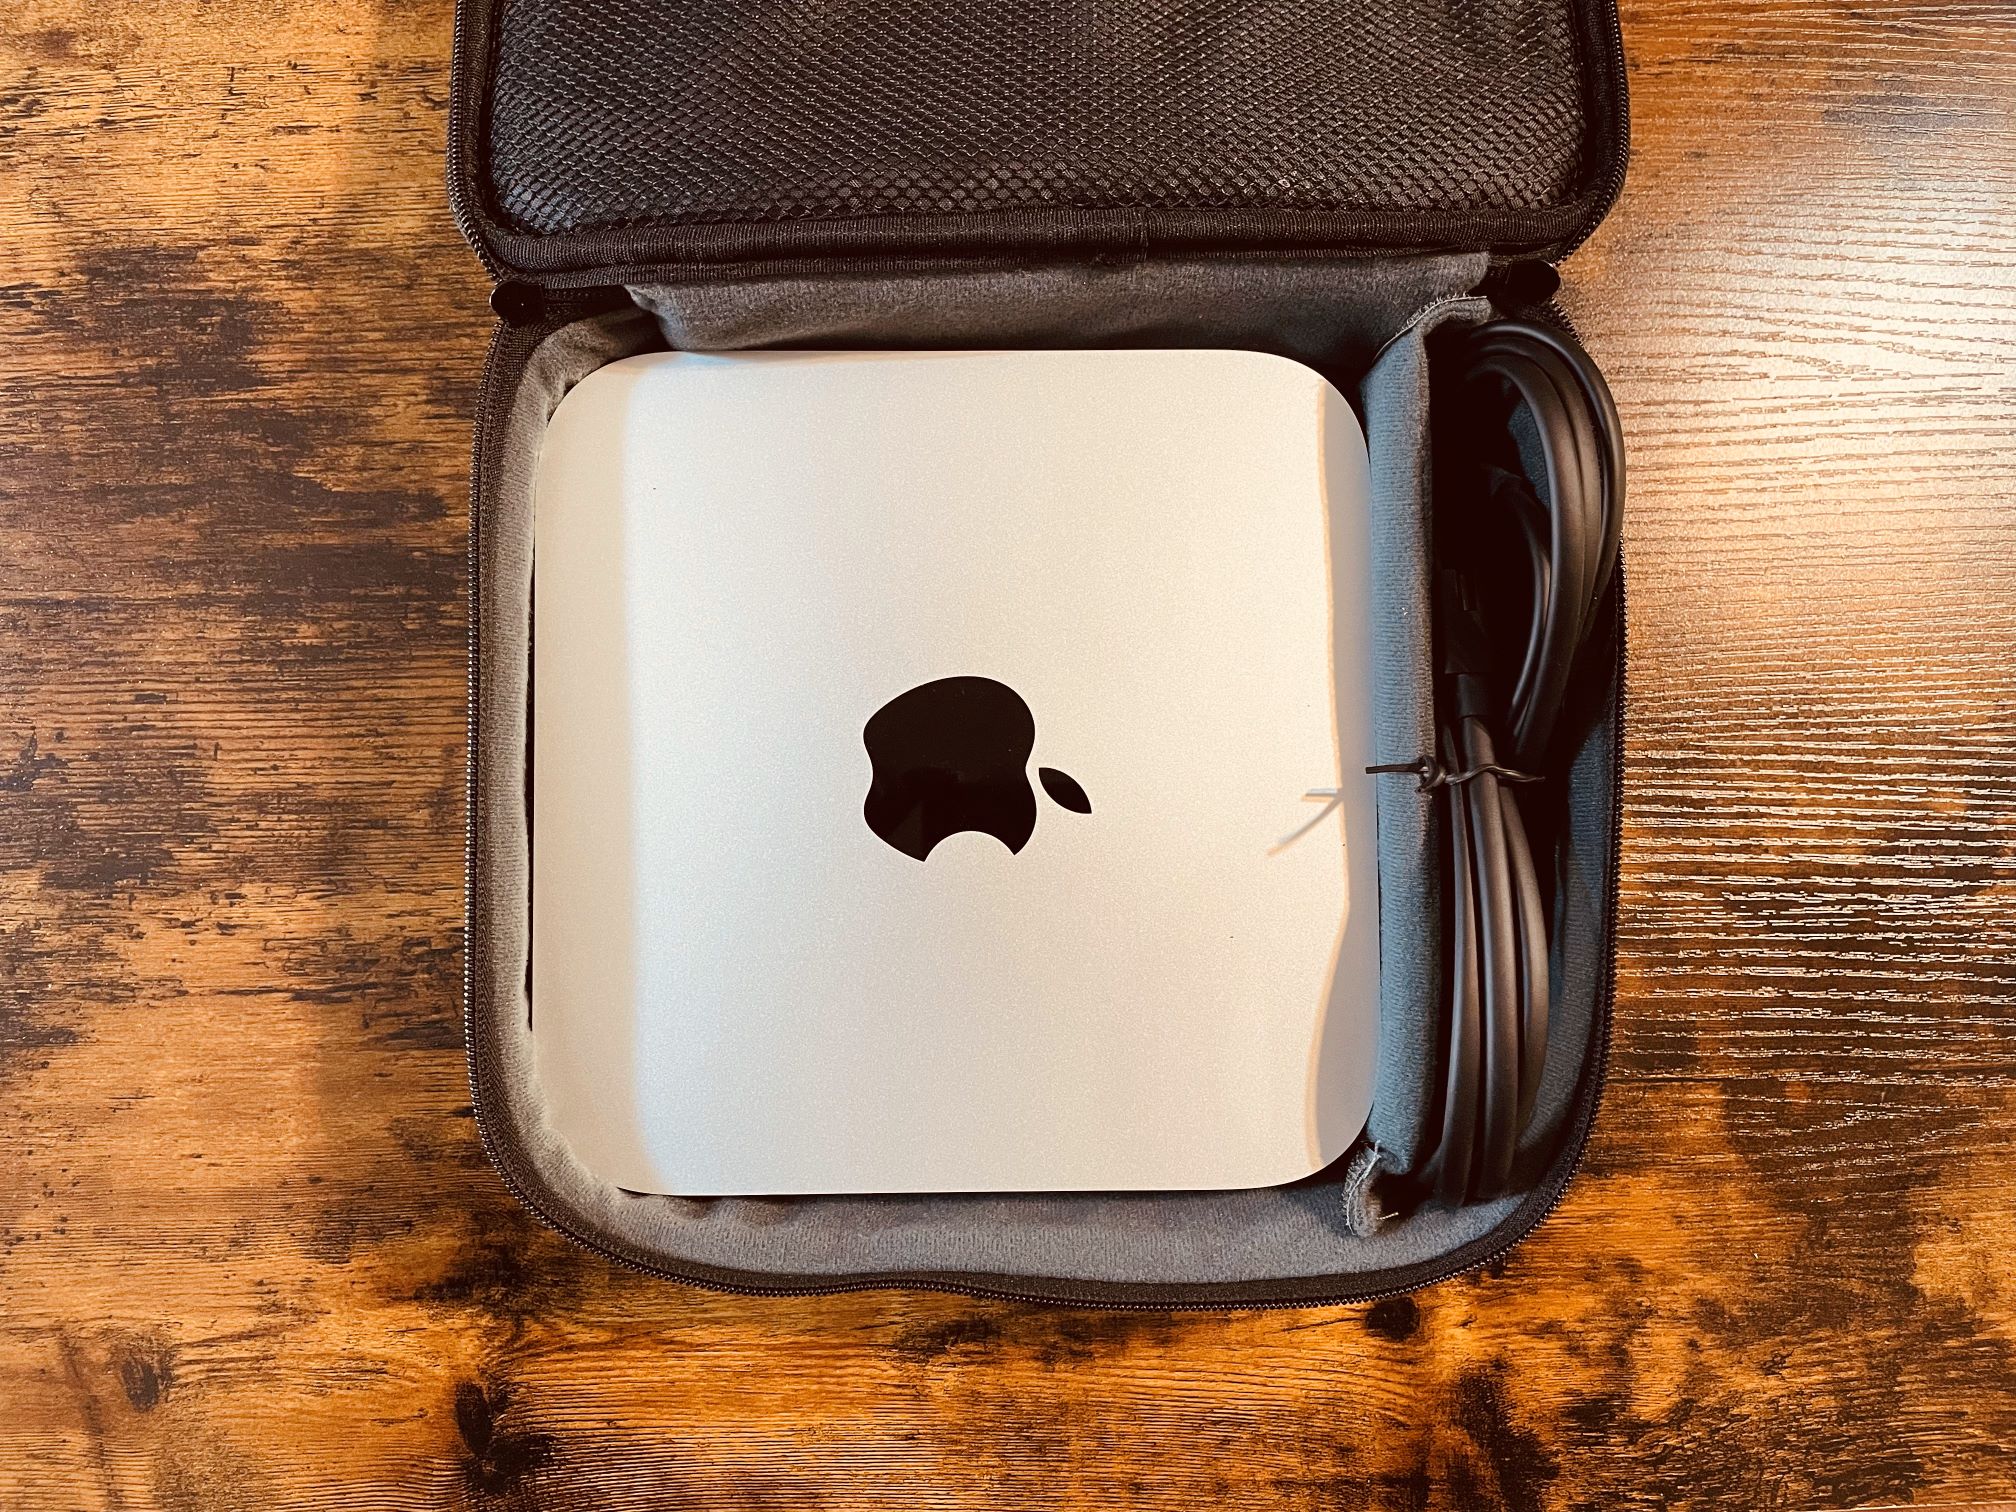 Mac mini fits perfectly